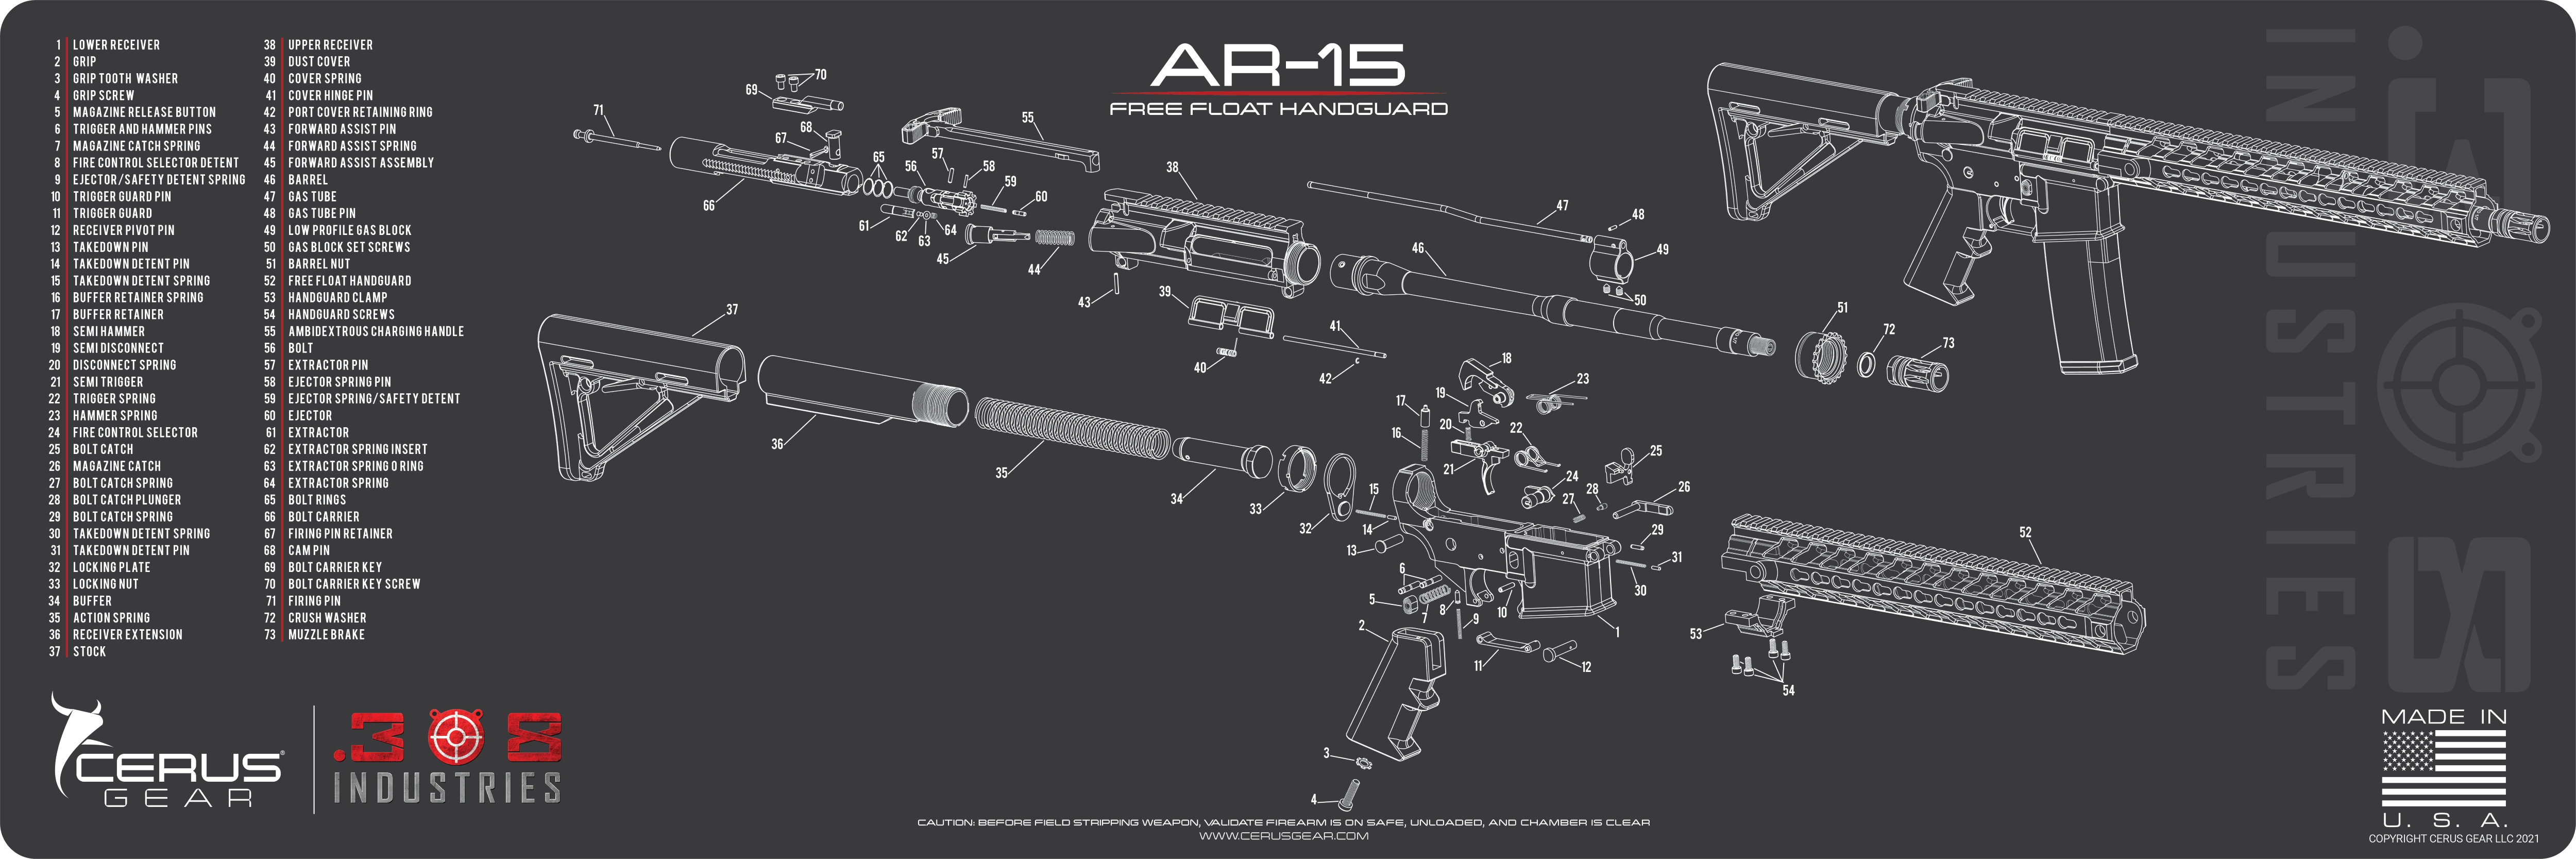 AR-15 SCHEMATIC RIFLE MAT